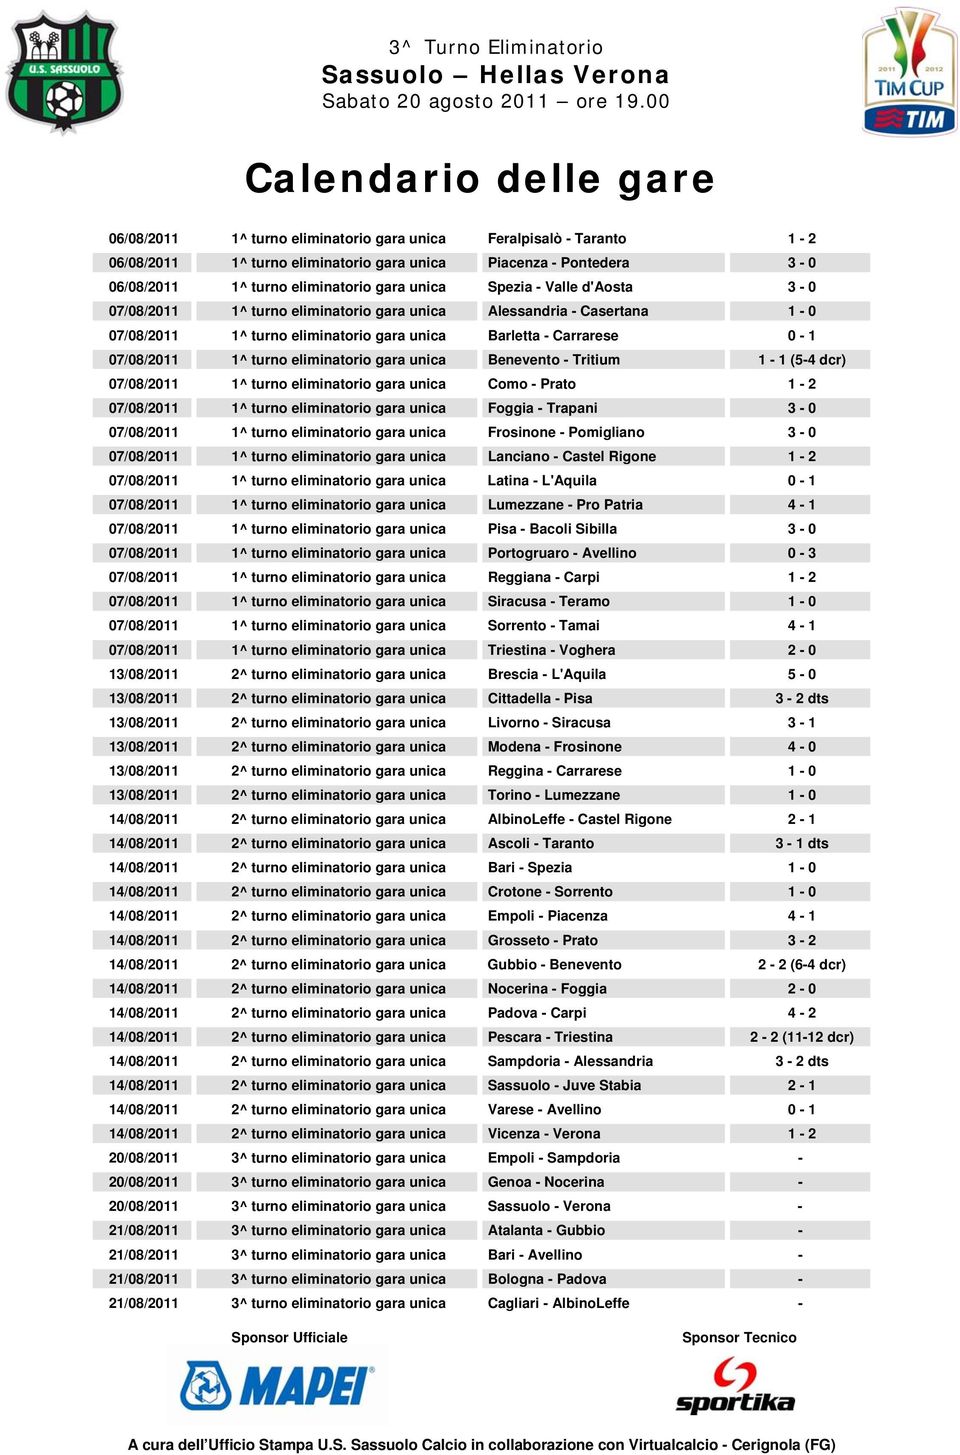 eliminatorio gara unica Benevento Tritium 1 1 (54 dcr) 07/08/2011 1^ turno eliminatorio gara unica Como Prato 1 2 07/08/2011 1^ turno eliminatorio gara unica Foggia Trapani 3 0 07/08/2011 1^ turno